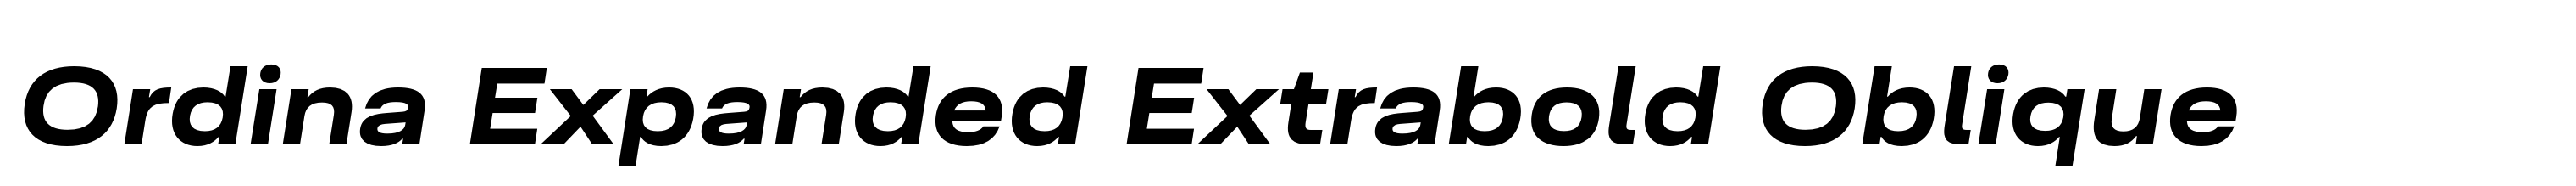 Ordina Expanded Extrabold Oblique